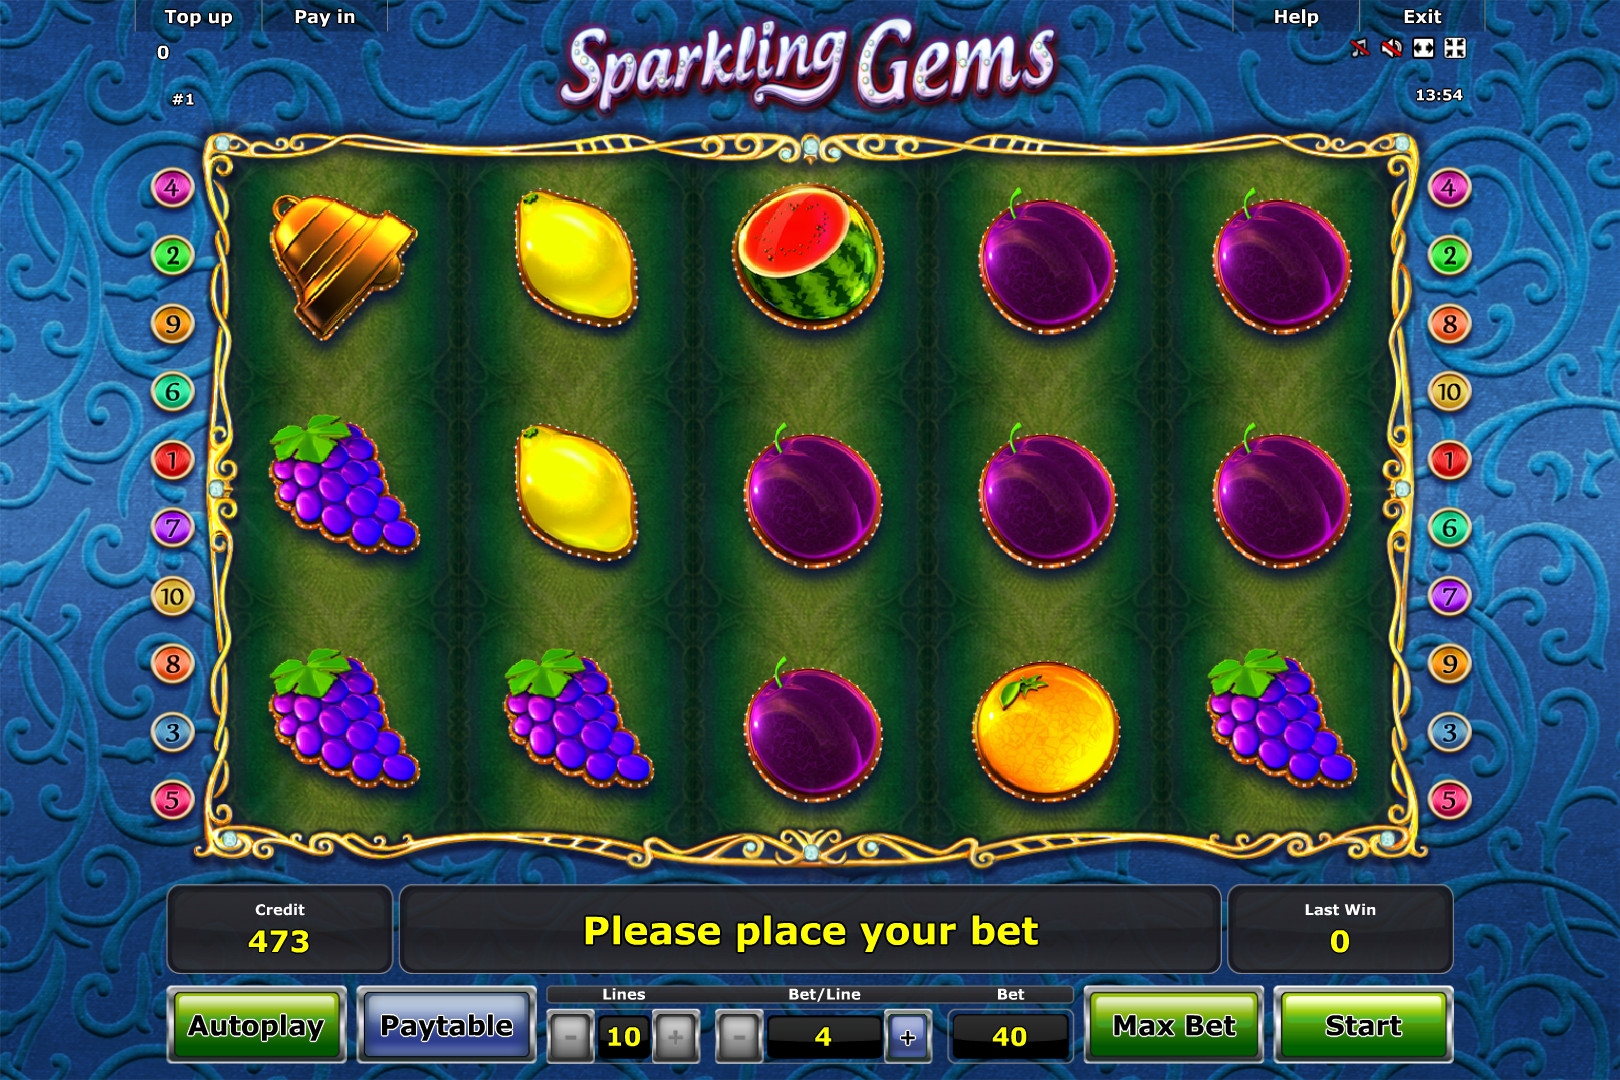 Sparkling Gems (Sparkling Gems) from category Slots